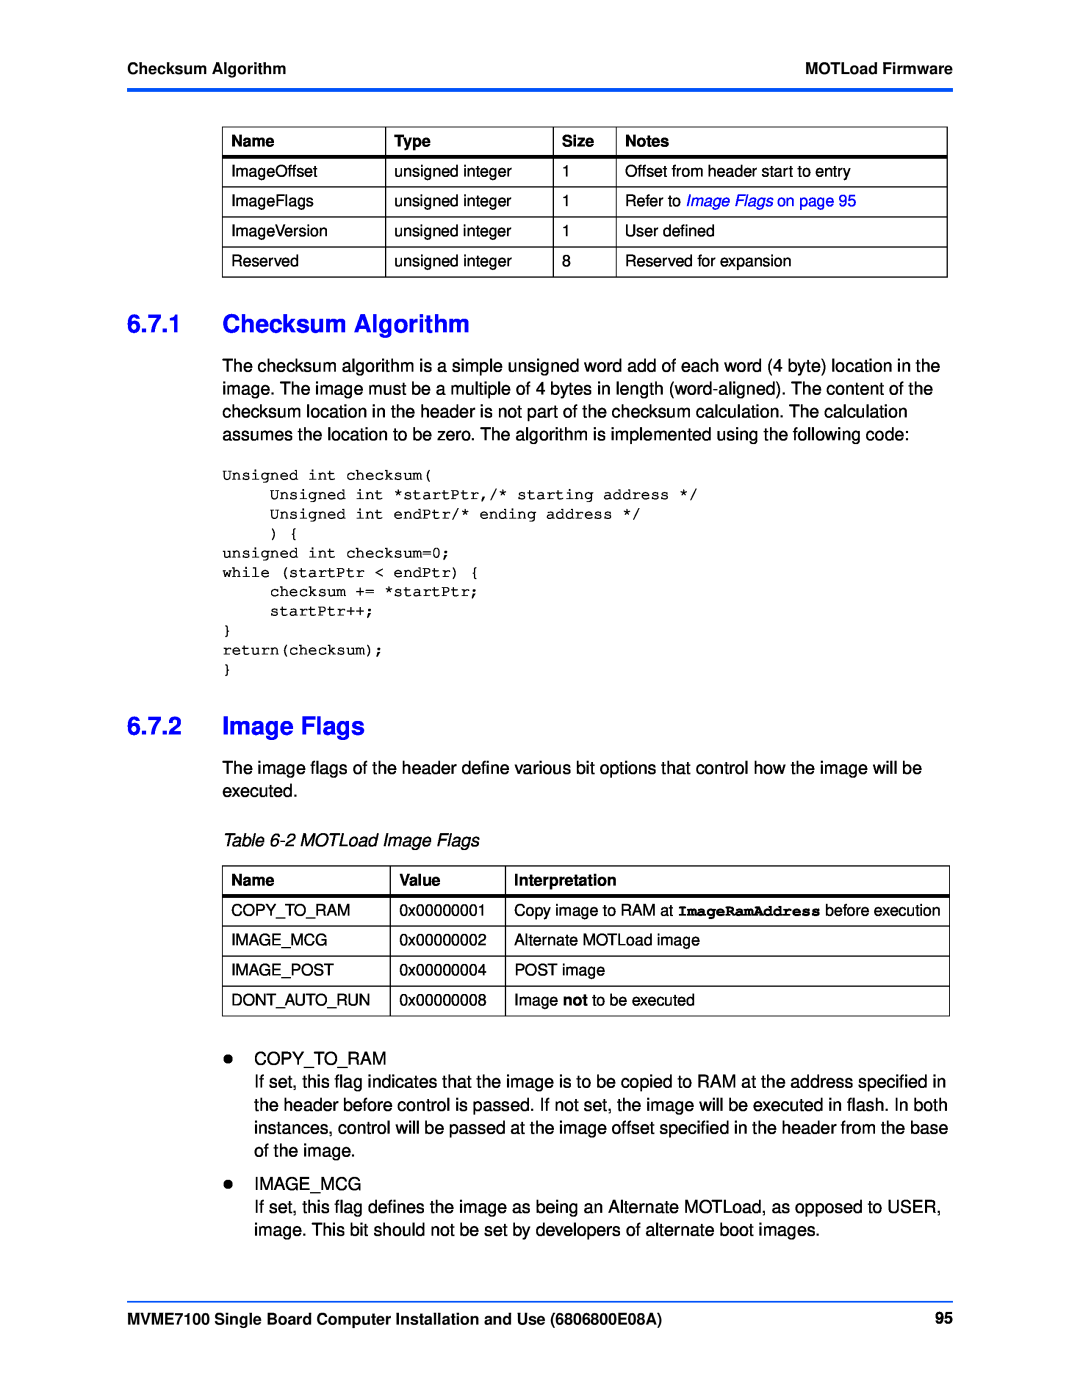 Emerson MVME7100 manual Checksum Algorithm, 2 MOTLoad Image Flags 